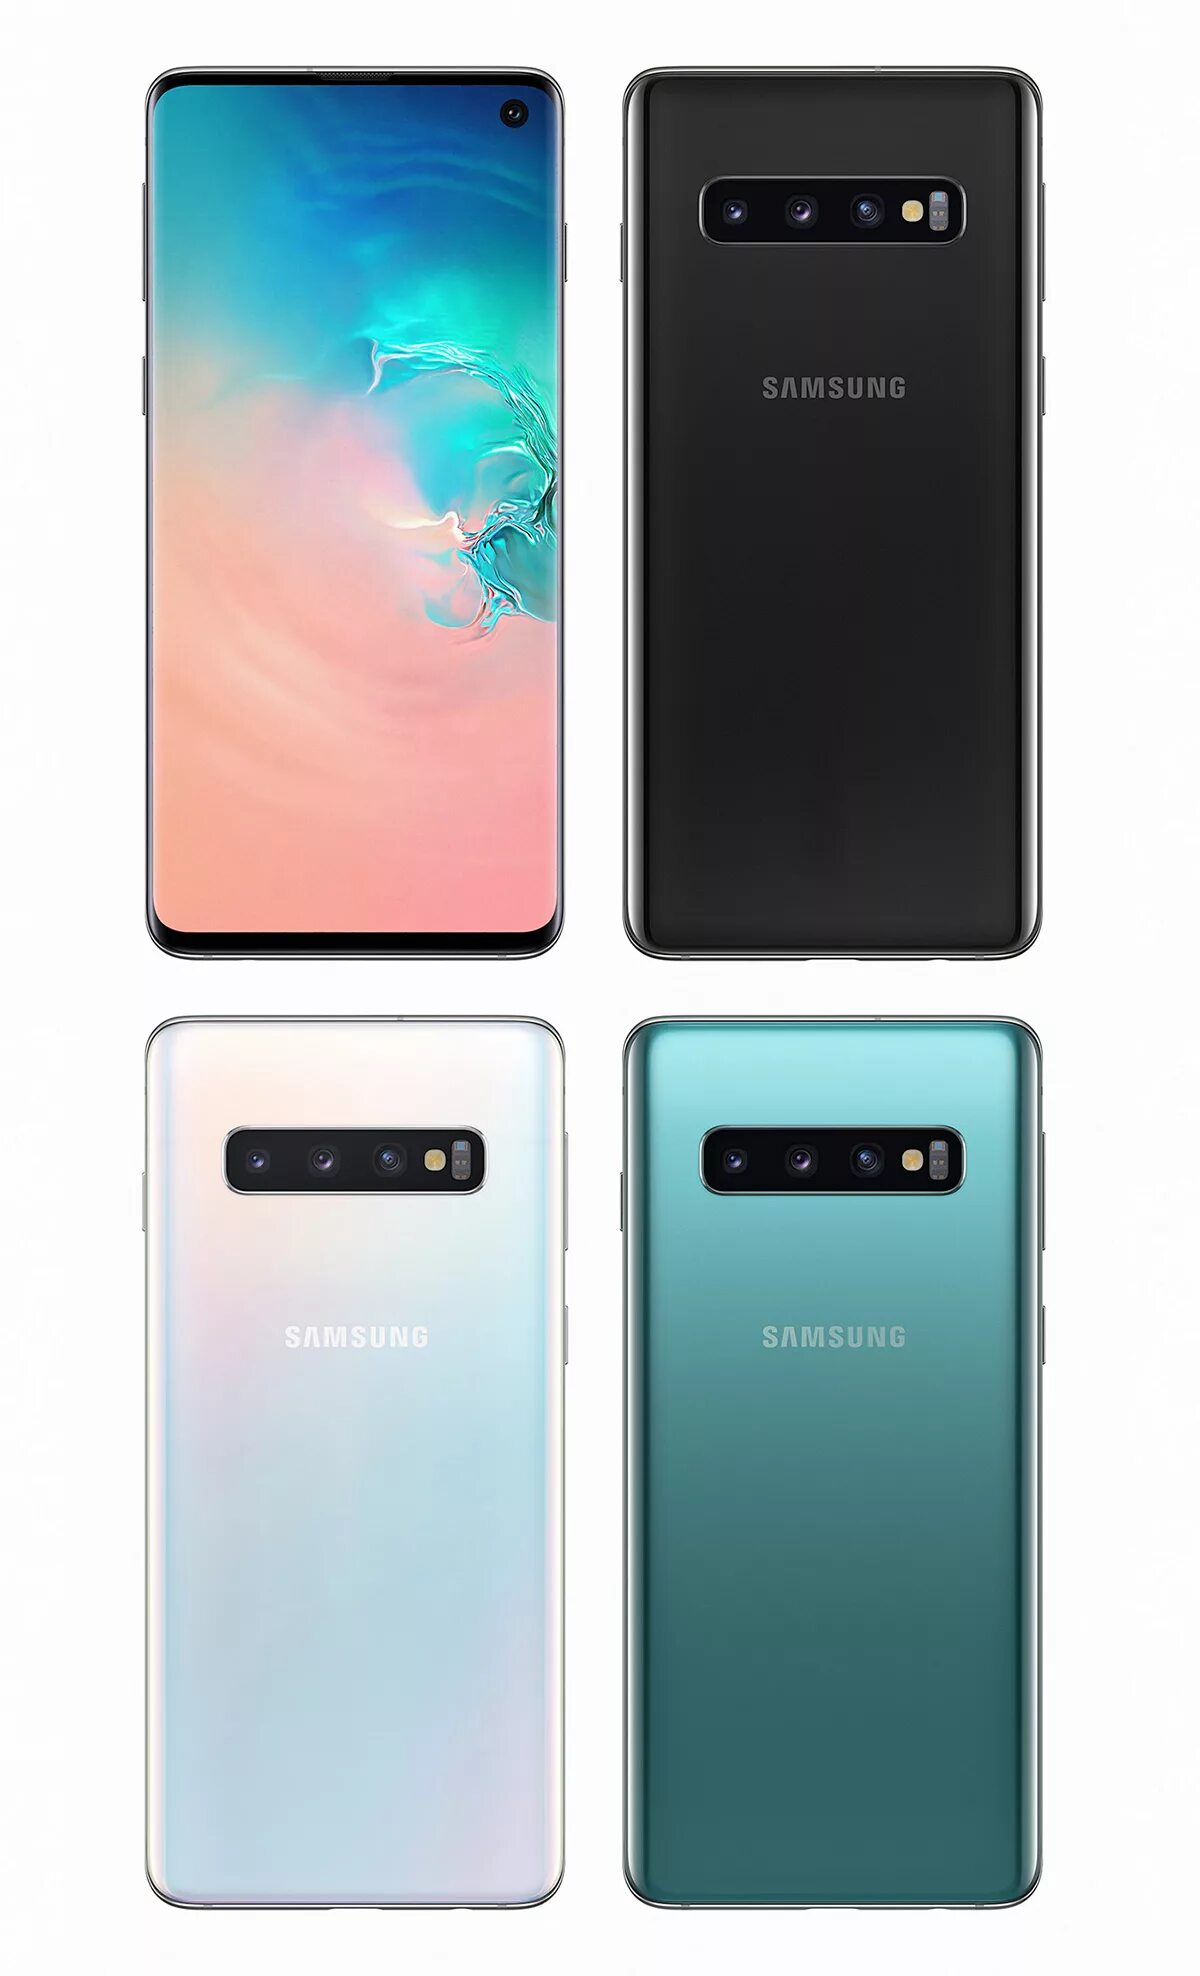 Самсунг 10 версия. Samsung Galaxy s10. Samsung Galaxy s10 Samsung. Samsung s10 Plus. Samsung Galaxy s10 / s10 +.